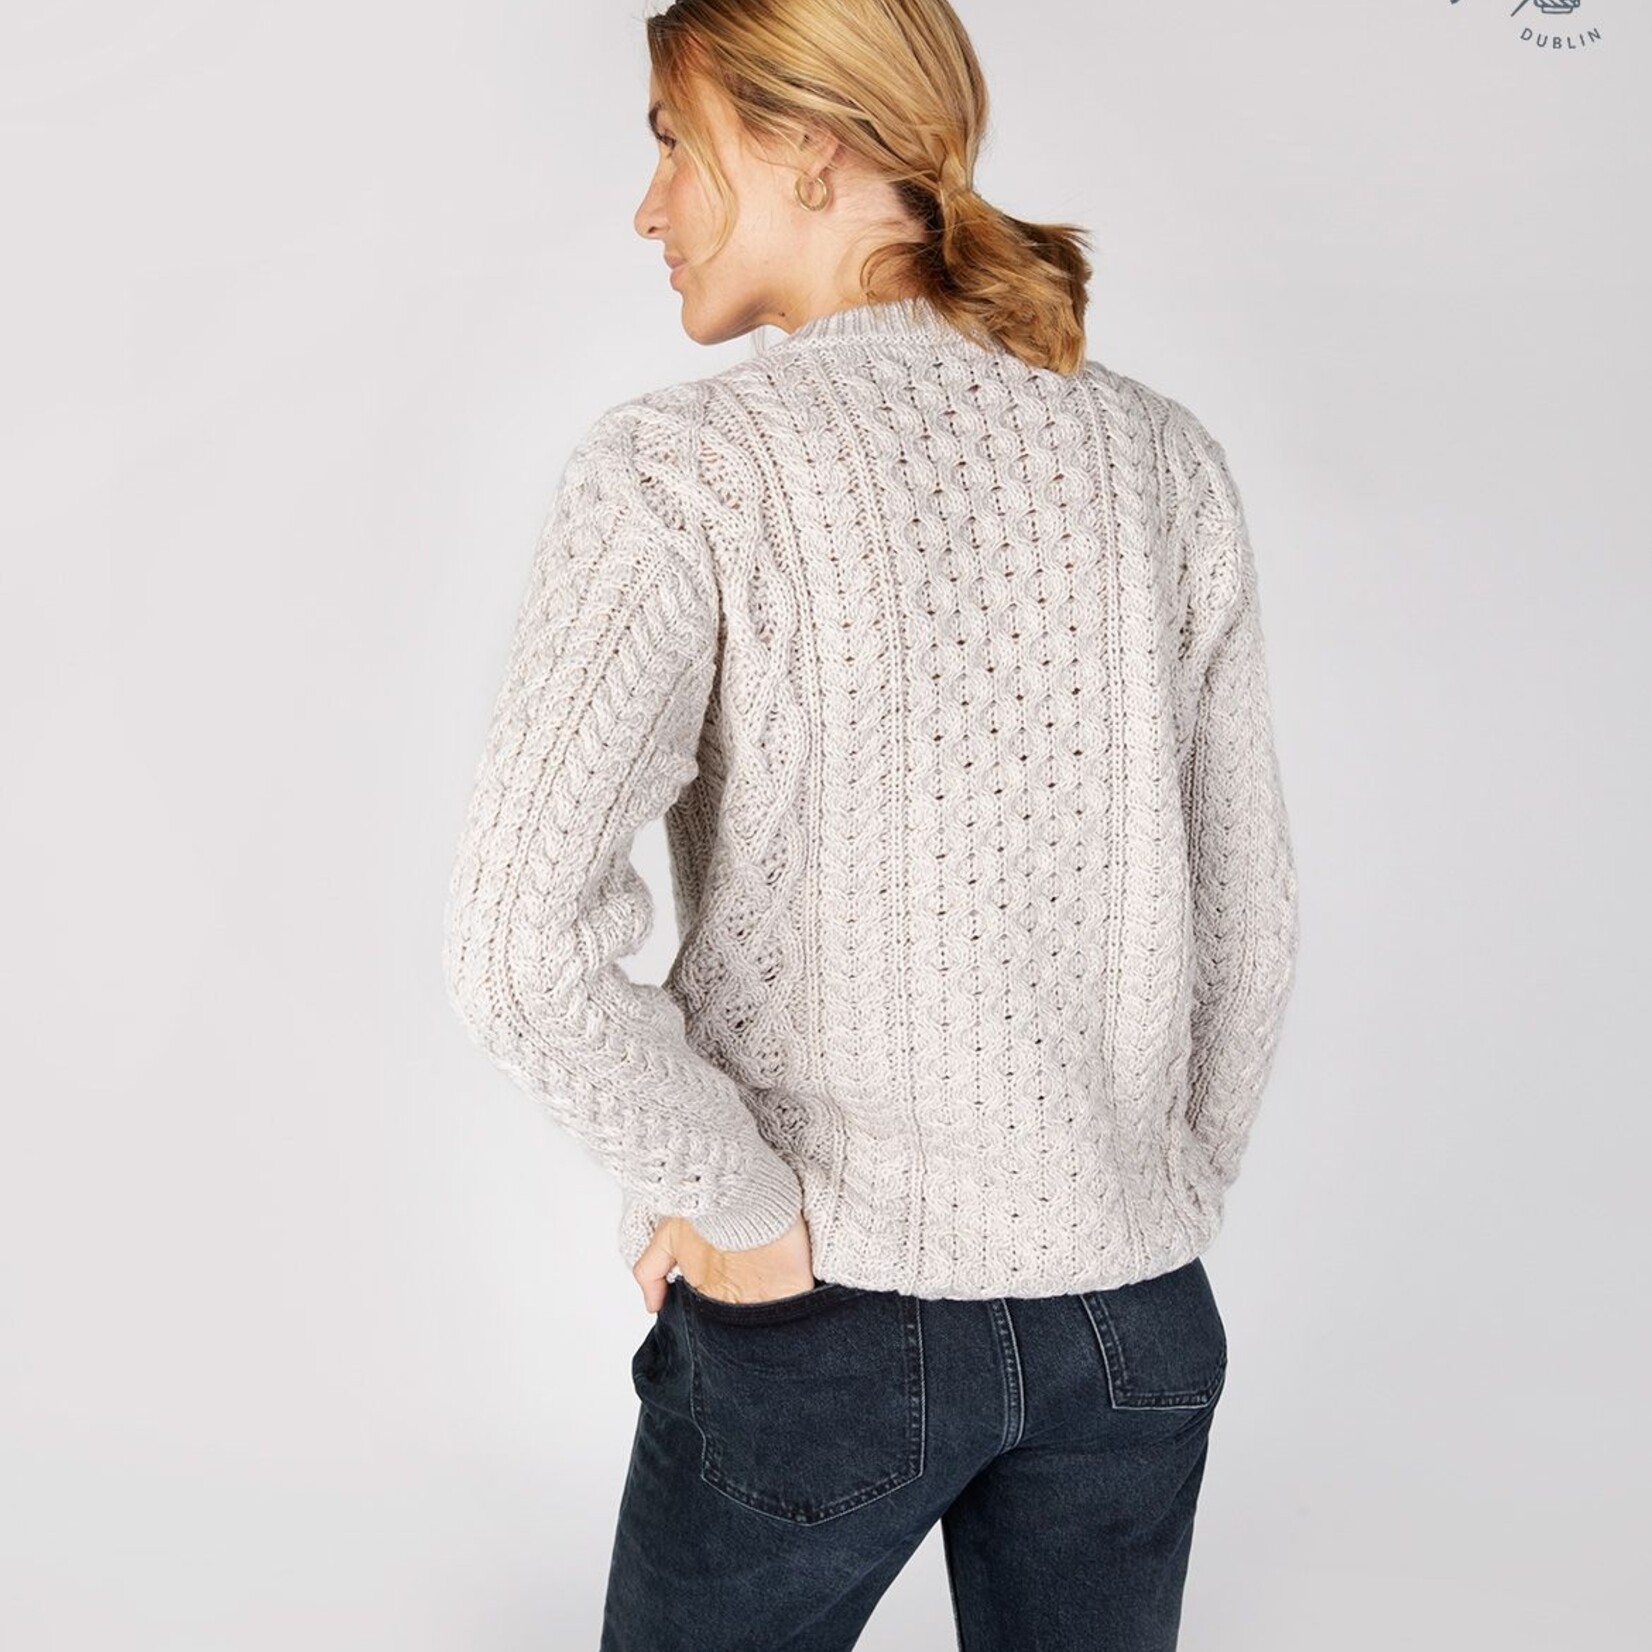 IrelandsEye Knitwear Silver Marl Wool Sweater w/ Honeycomb Stitch :